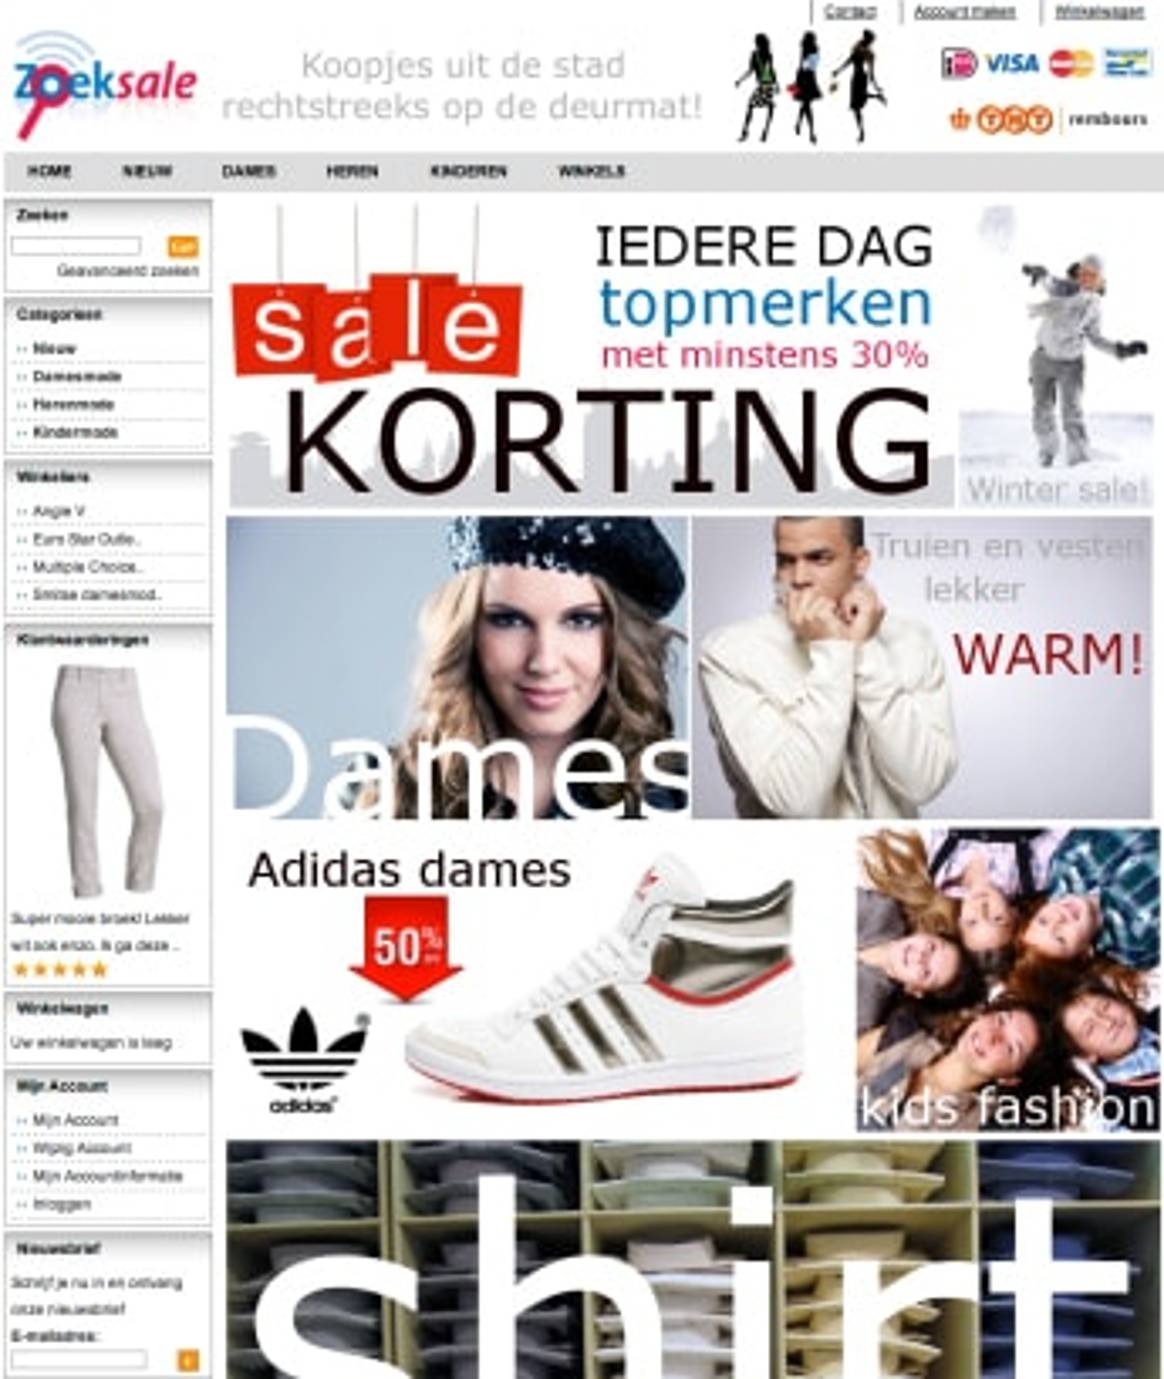 Zoeksale.nl: online koopjes van fysieke winkels shoppen